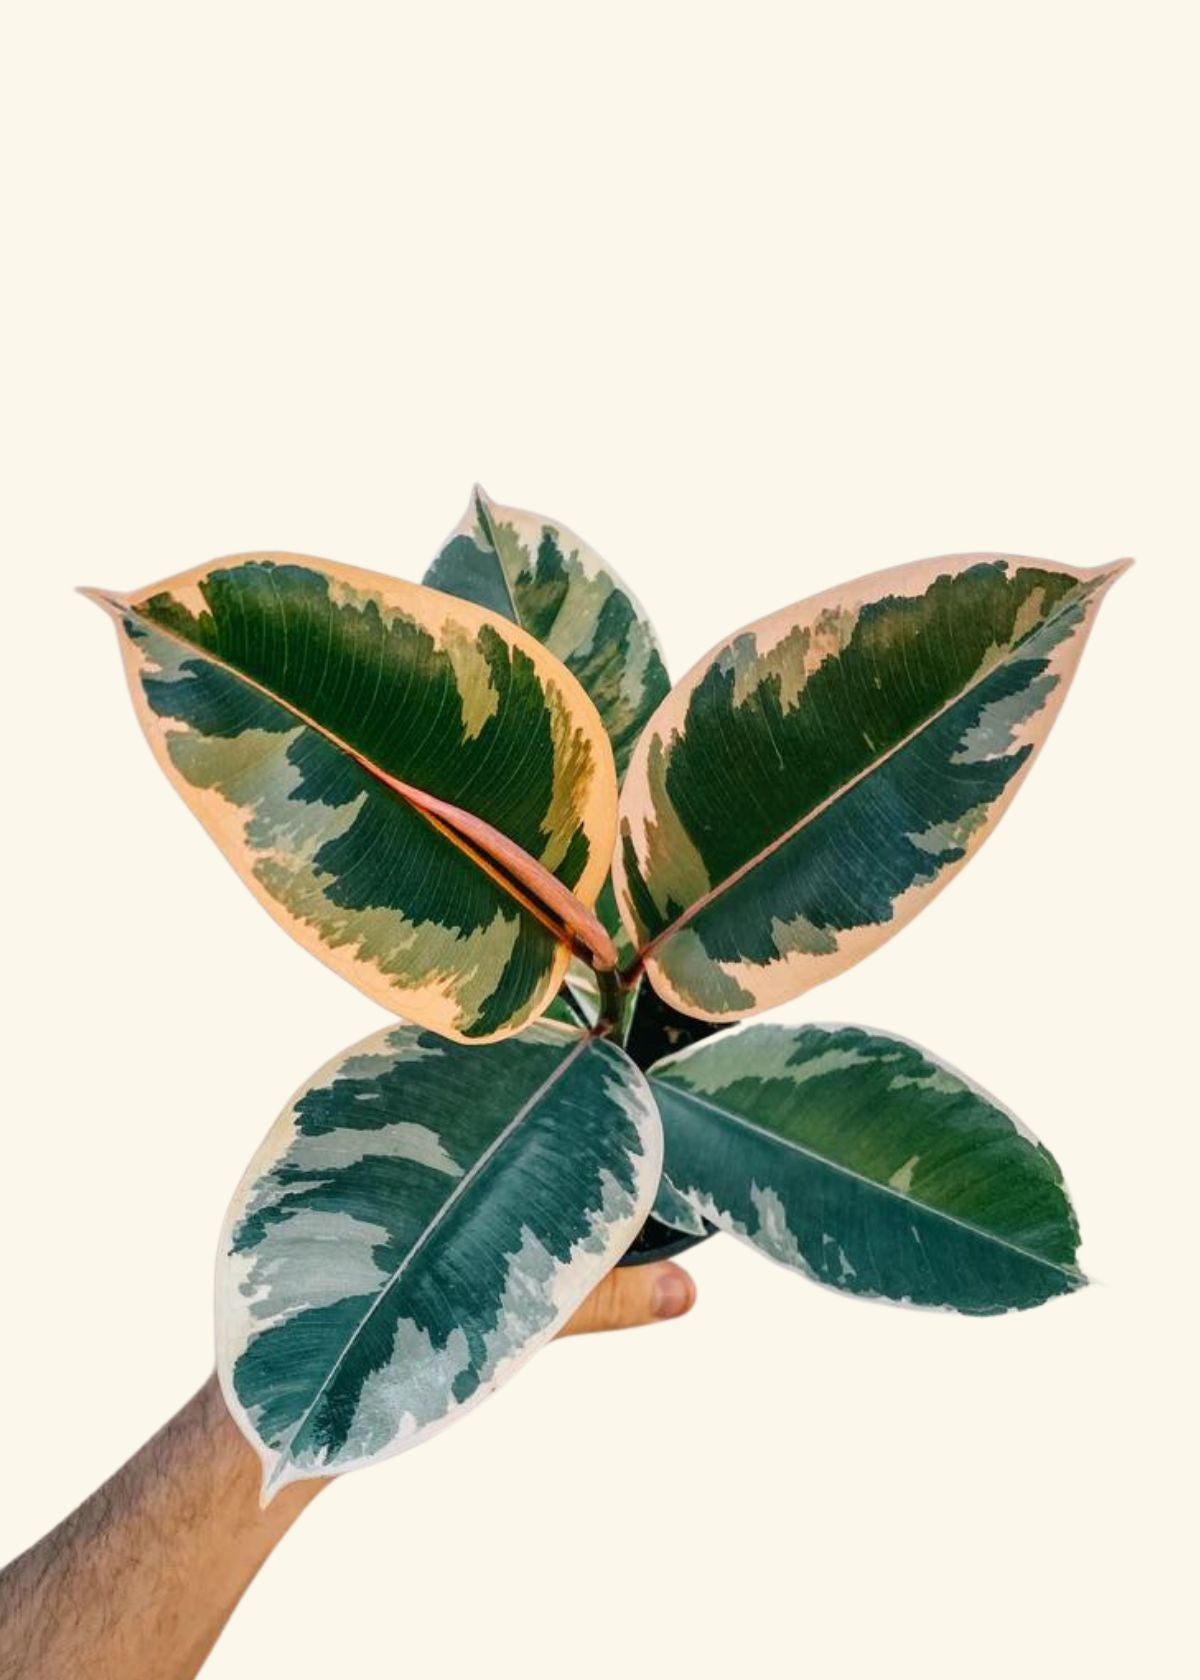 4” Ficus elastica variegata ‘Tineke’